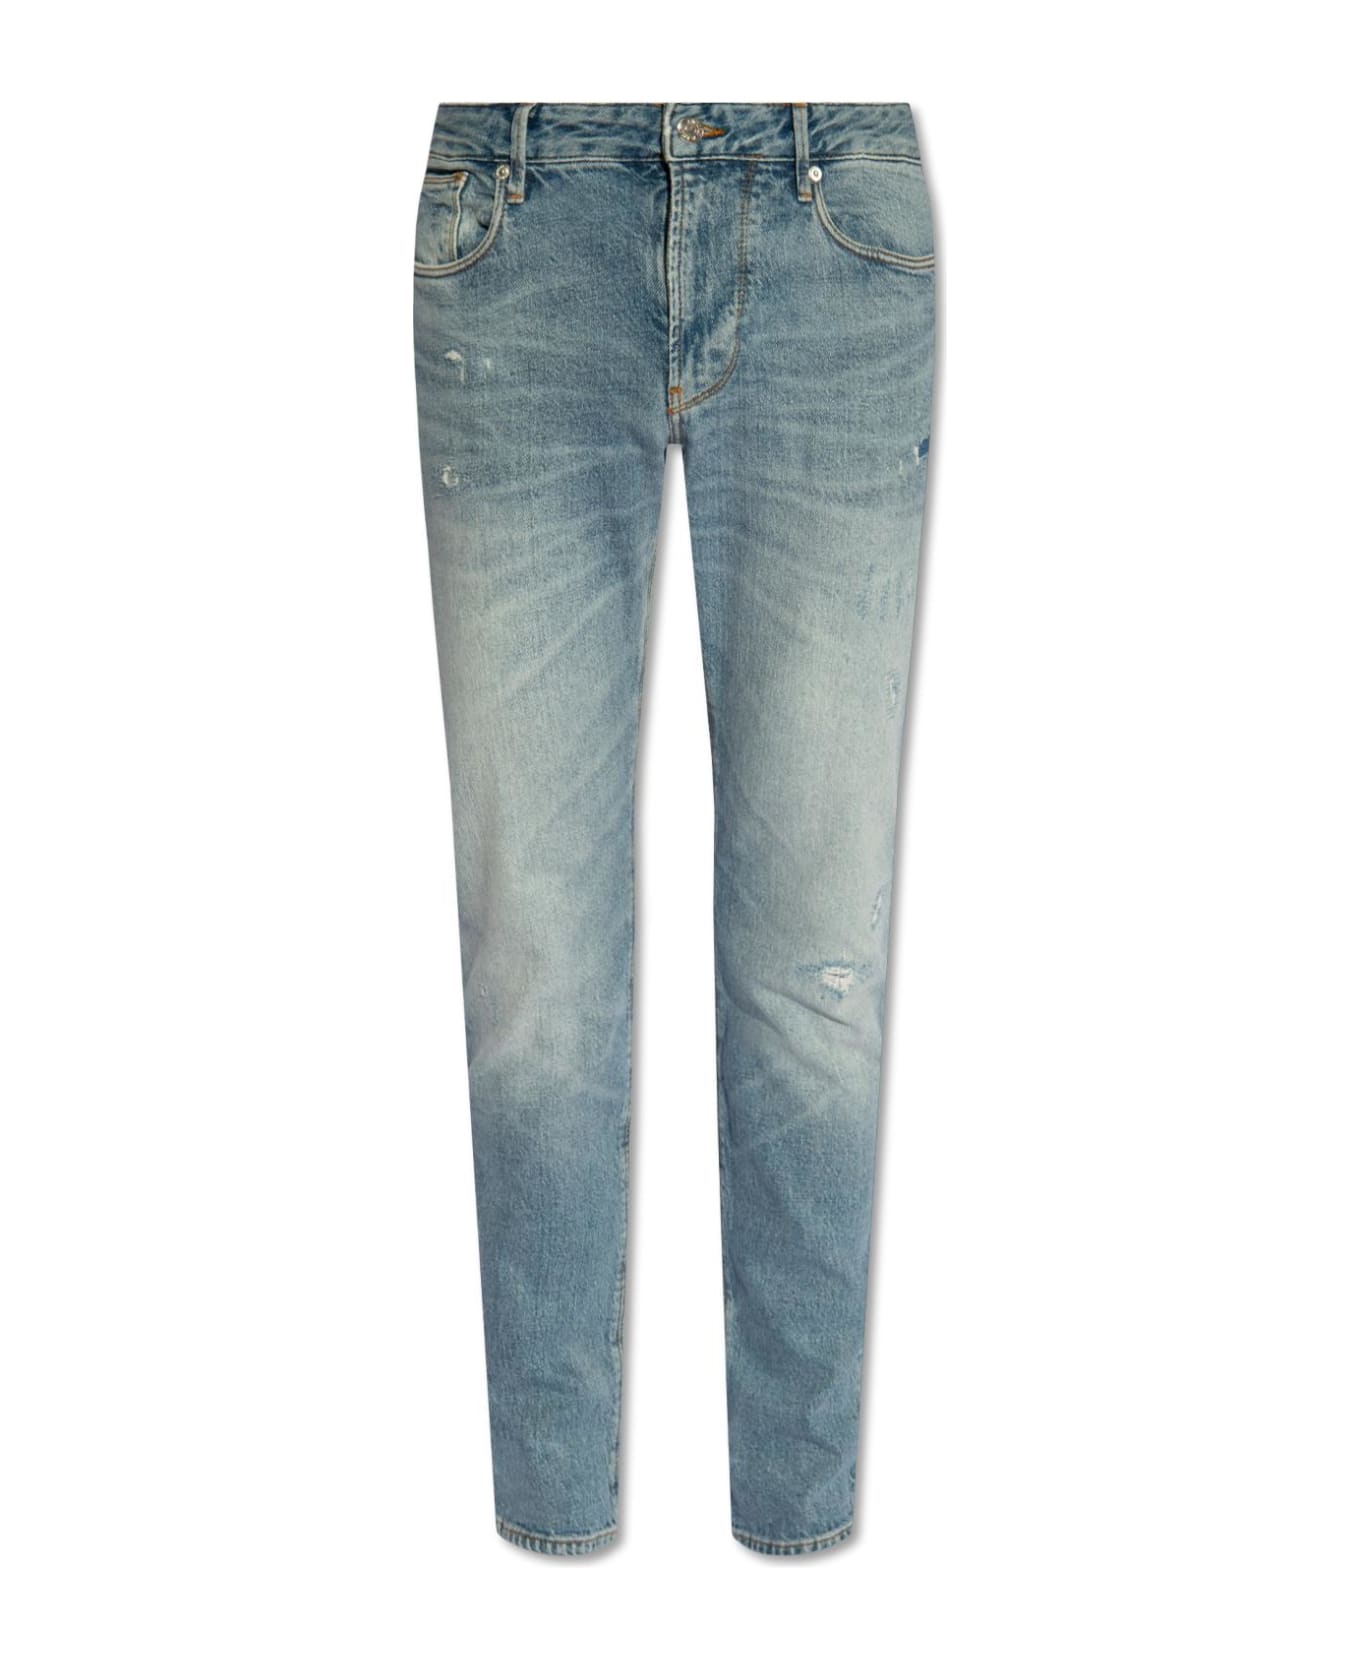 Emporio Armani Slim-fit Jeans - Stone Washed デニム